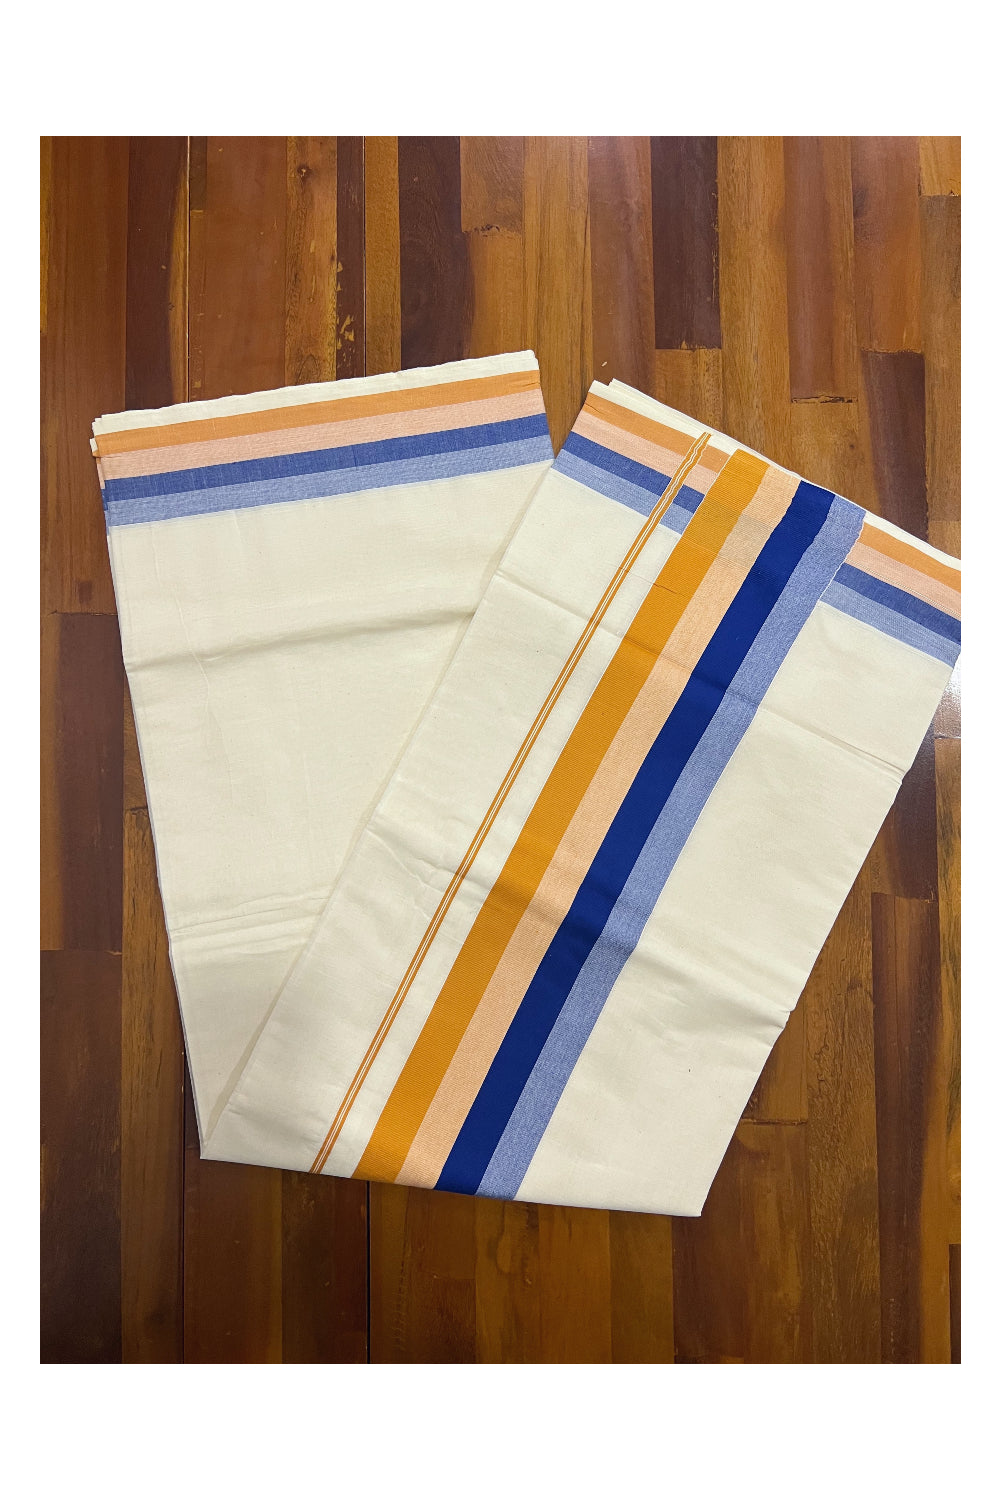 Kerala Cotton Saree with Blue and Orange Lines Border Design